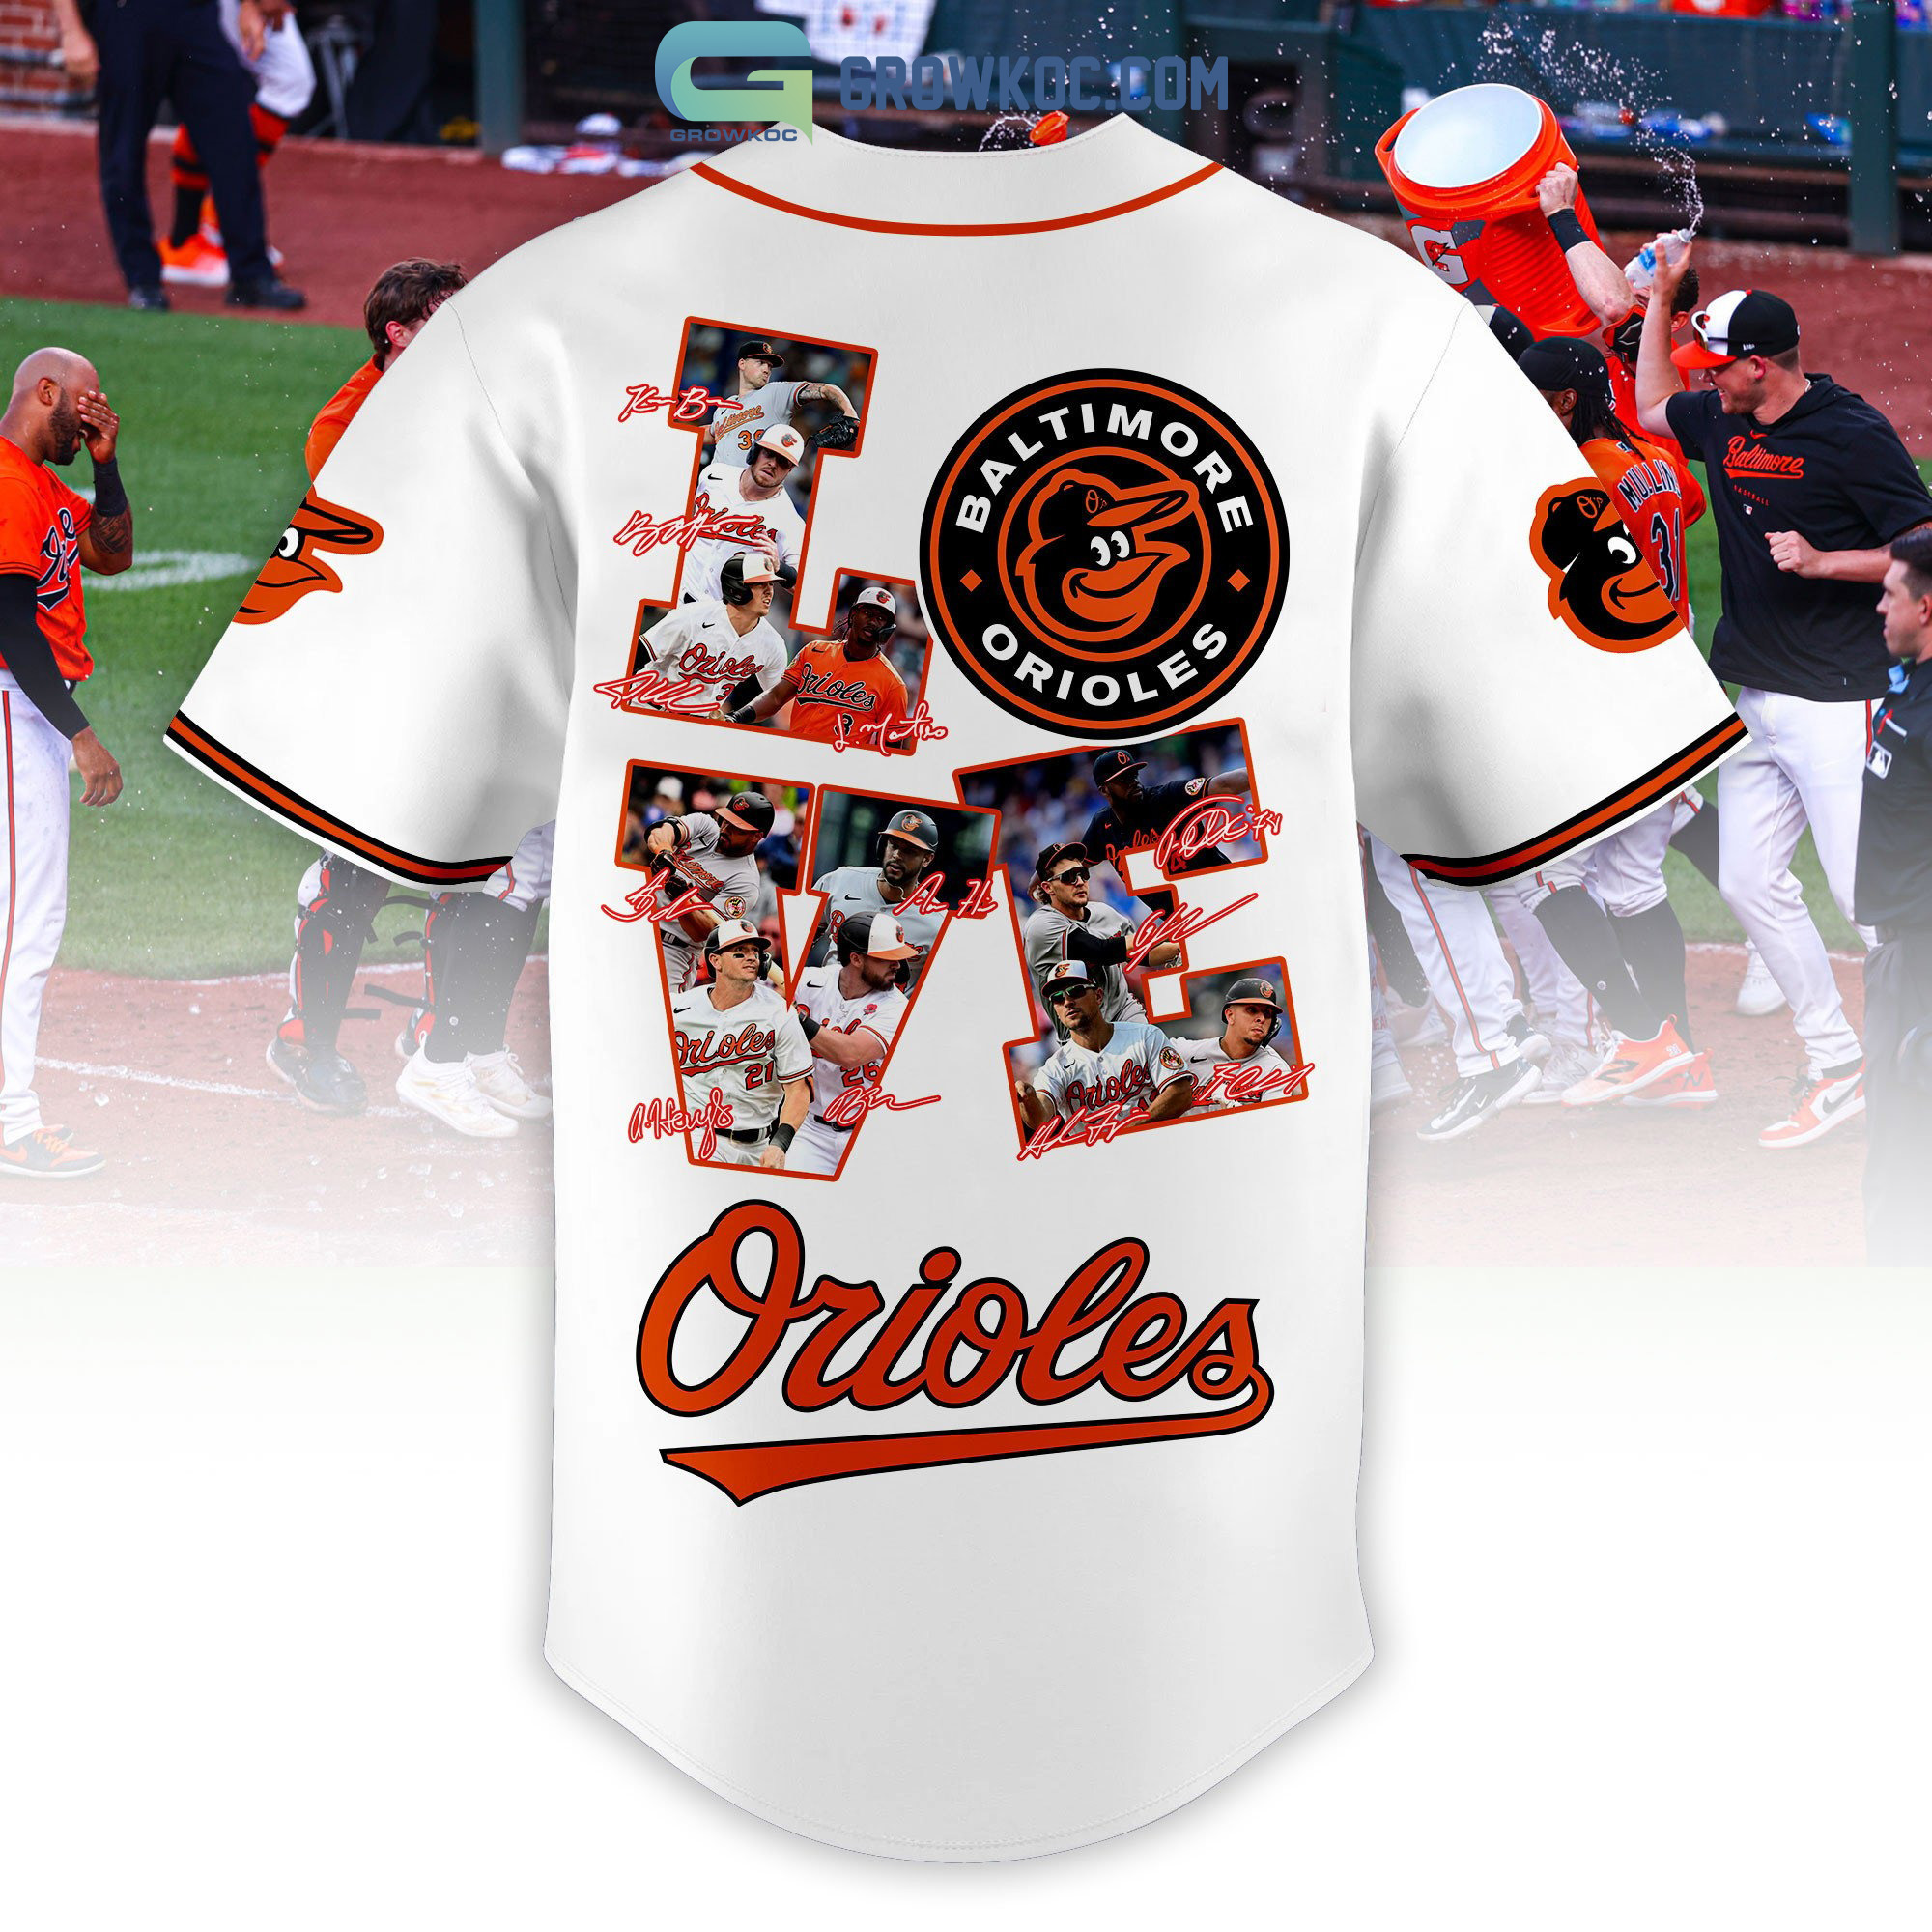 Baltimore Orioles Love Team Personalized Baseball Jersey - Growkoc